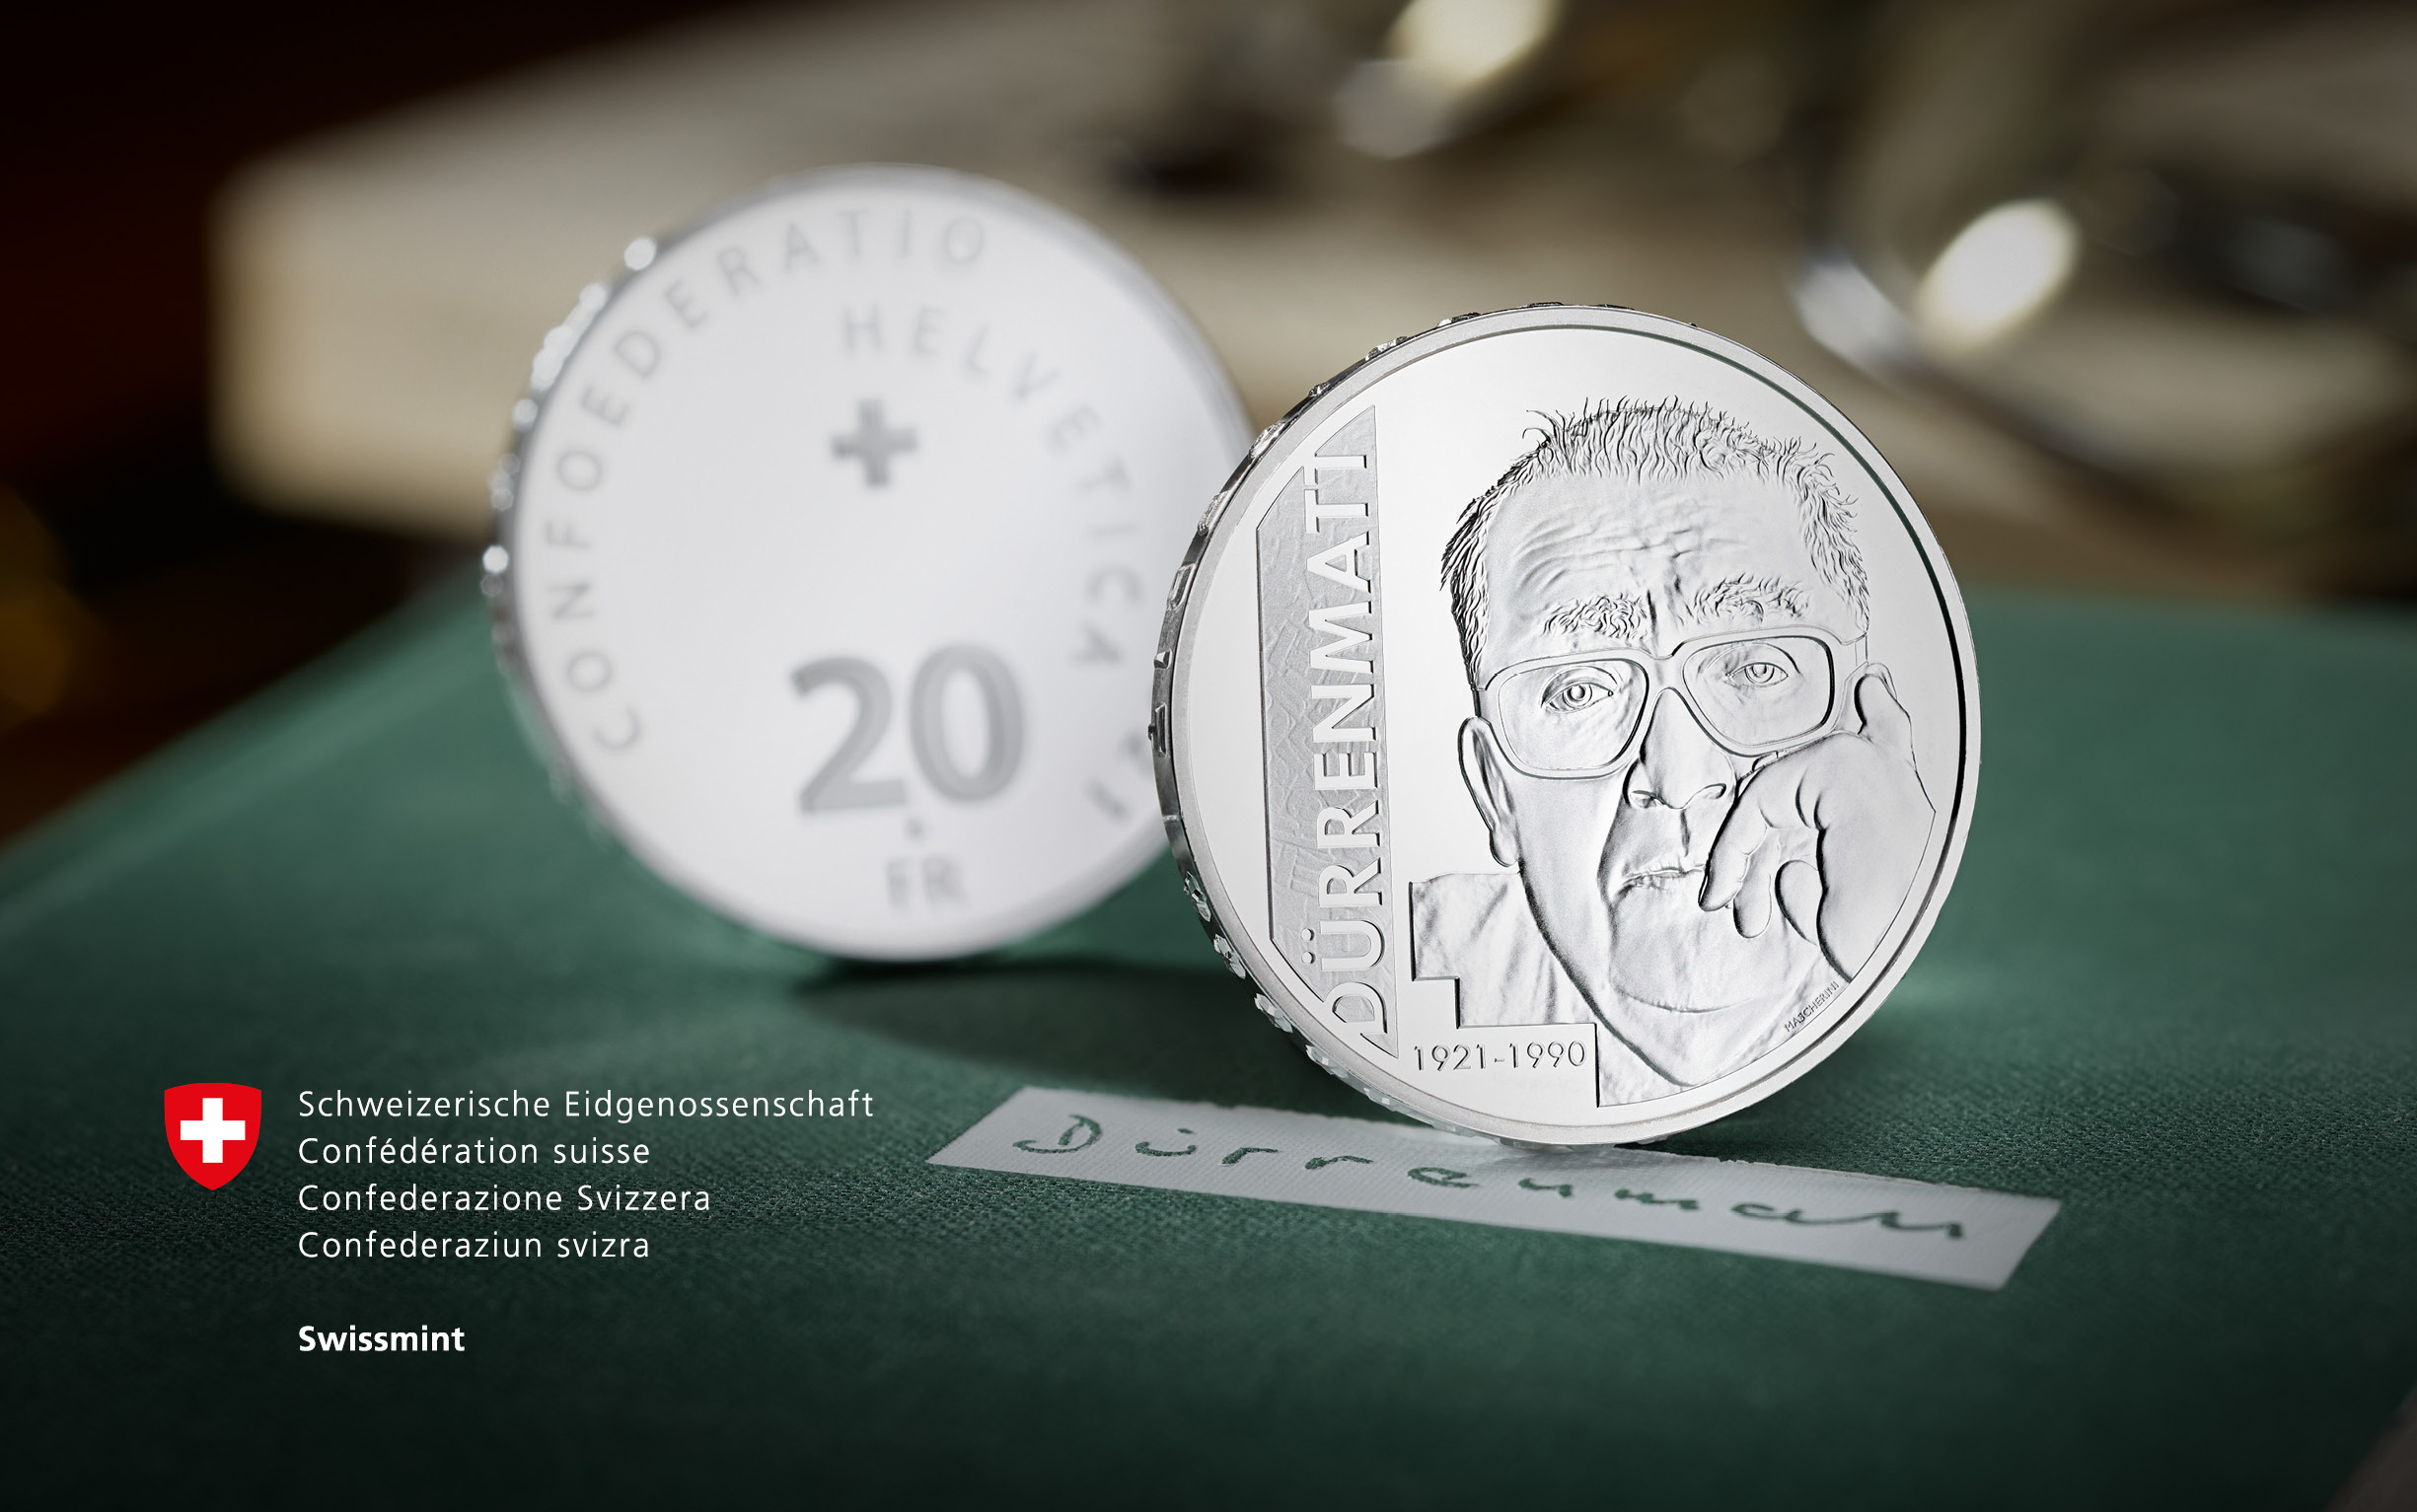 «100 years of Friedrich Dürrenmatt» silver coin